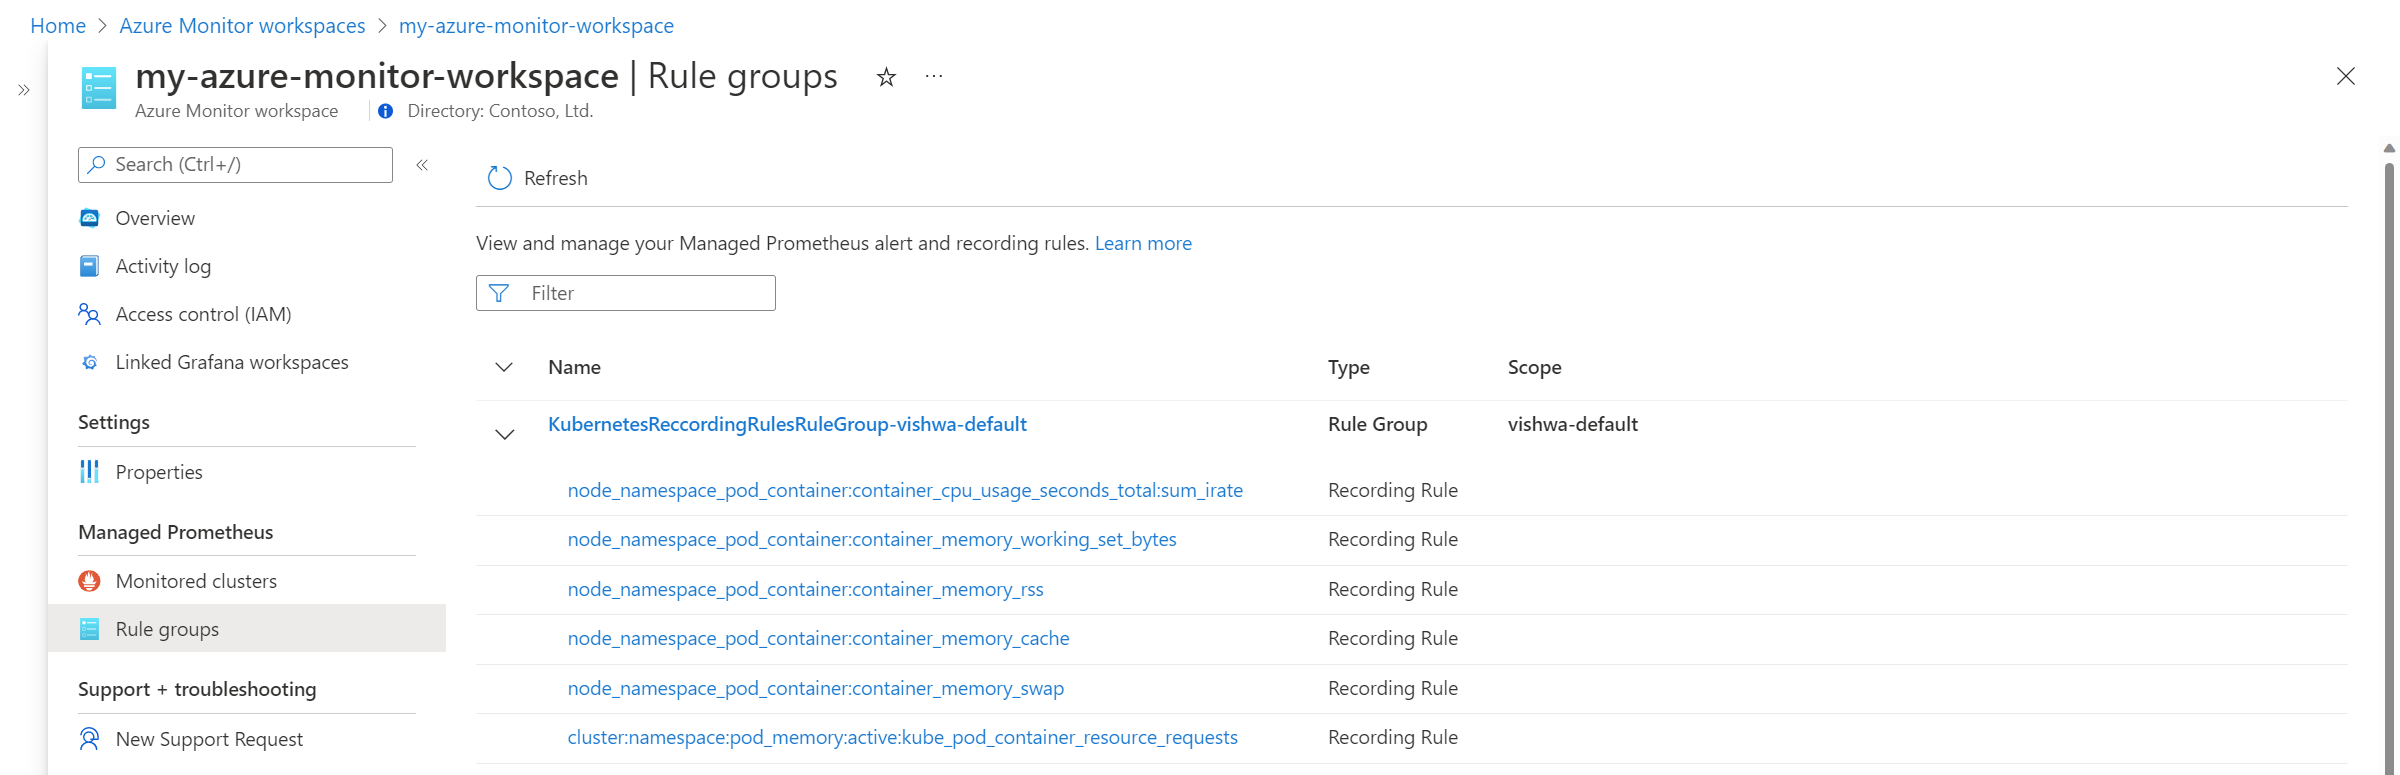 Screenshot of rule groups in an Azure Monitor workspace.